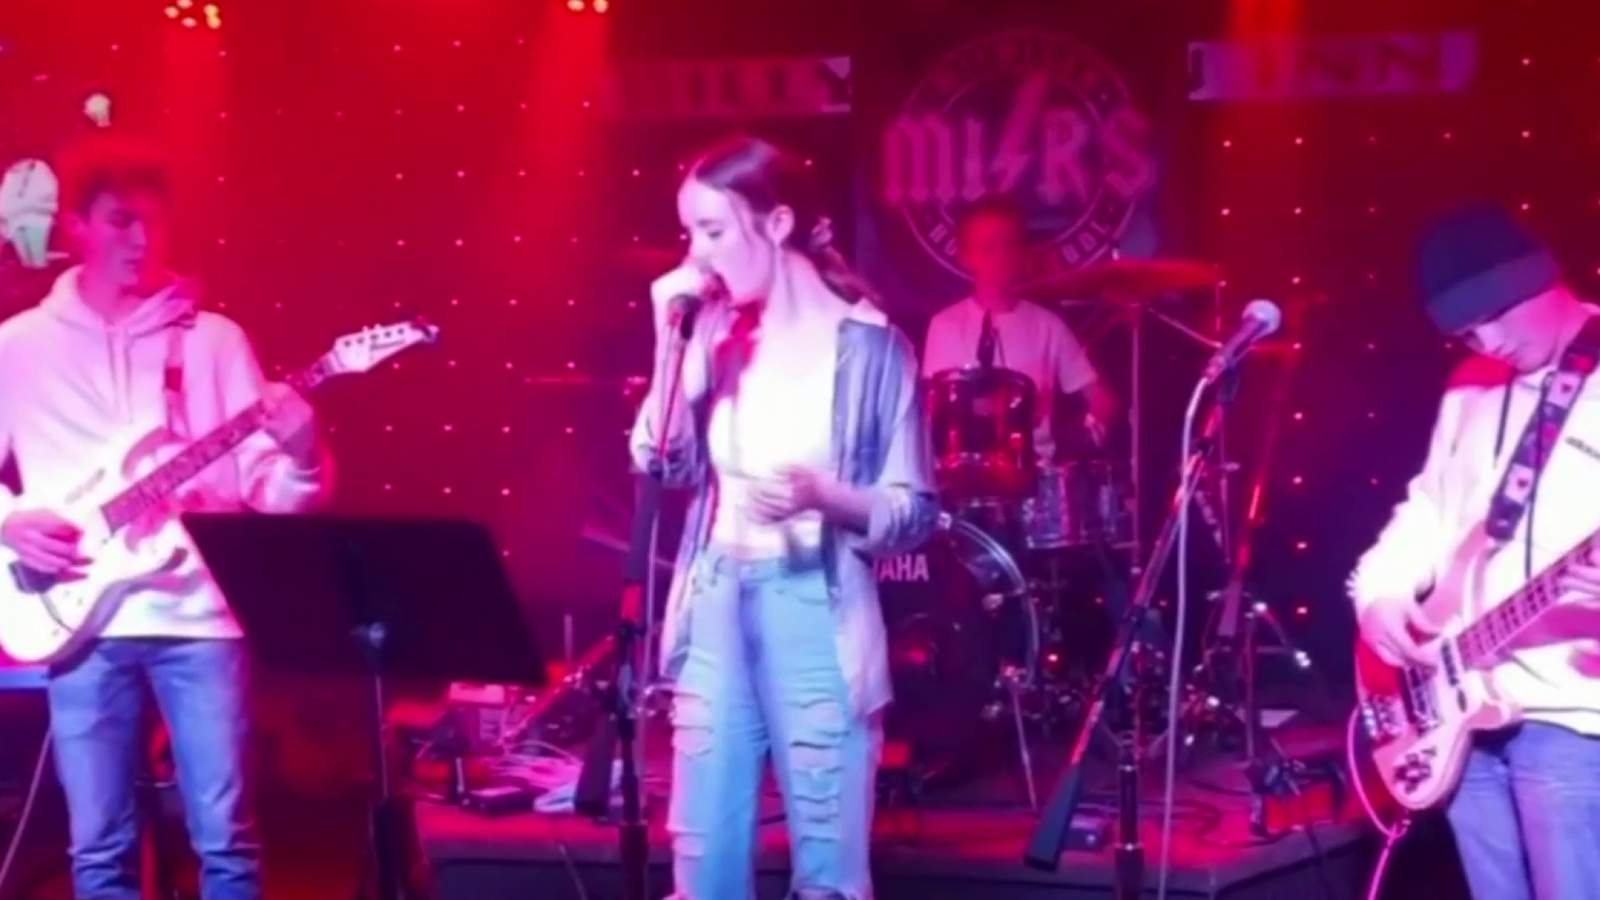 Michigan Rock School creates album remotely, donates proceeds to charity